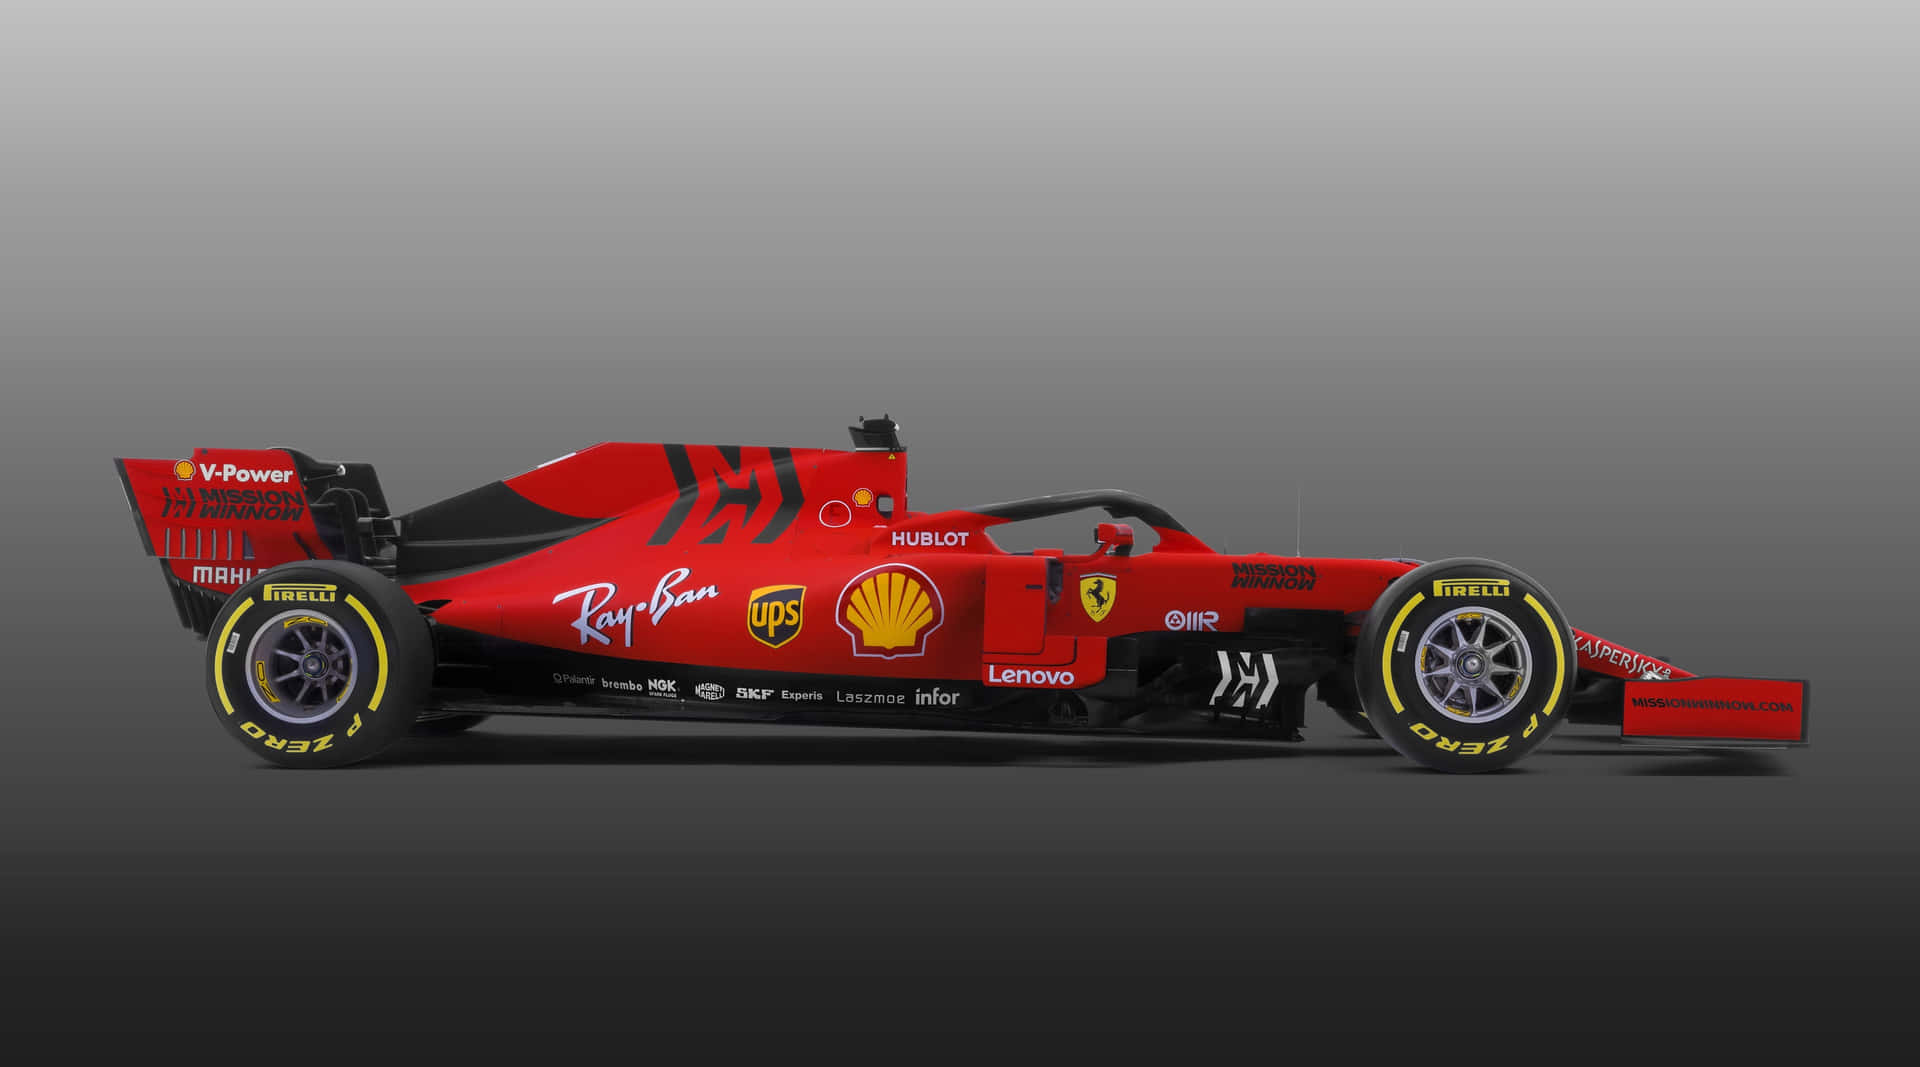 "Ferrari F1 2019 Race Car Speeding Through the Streets" Wallpaper